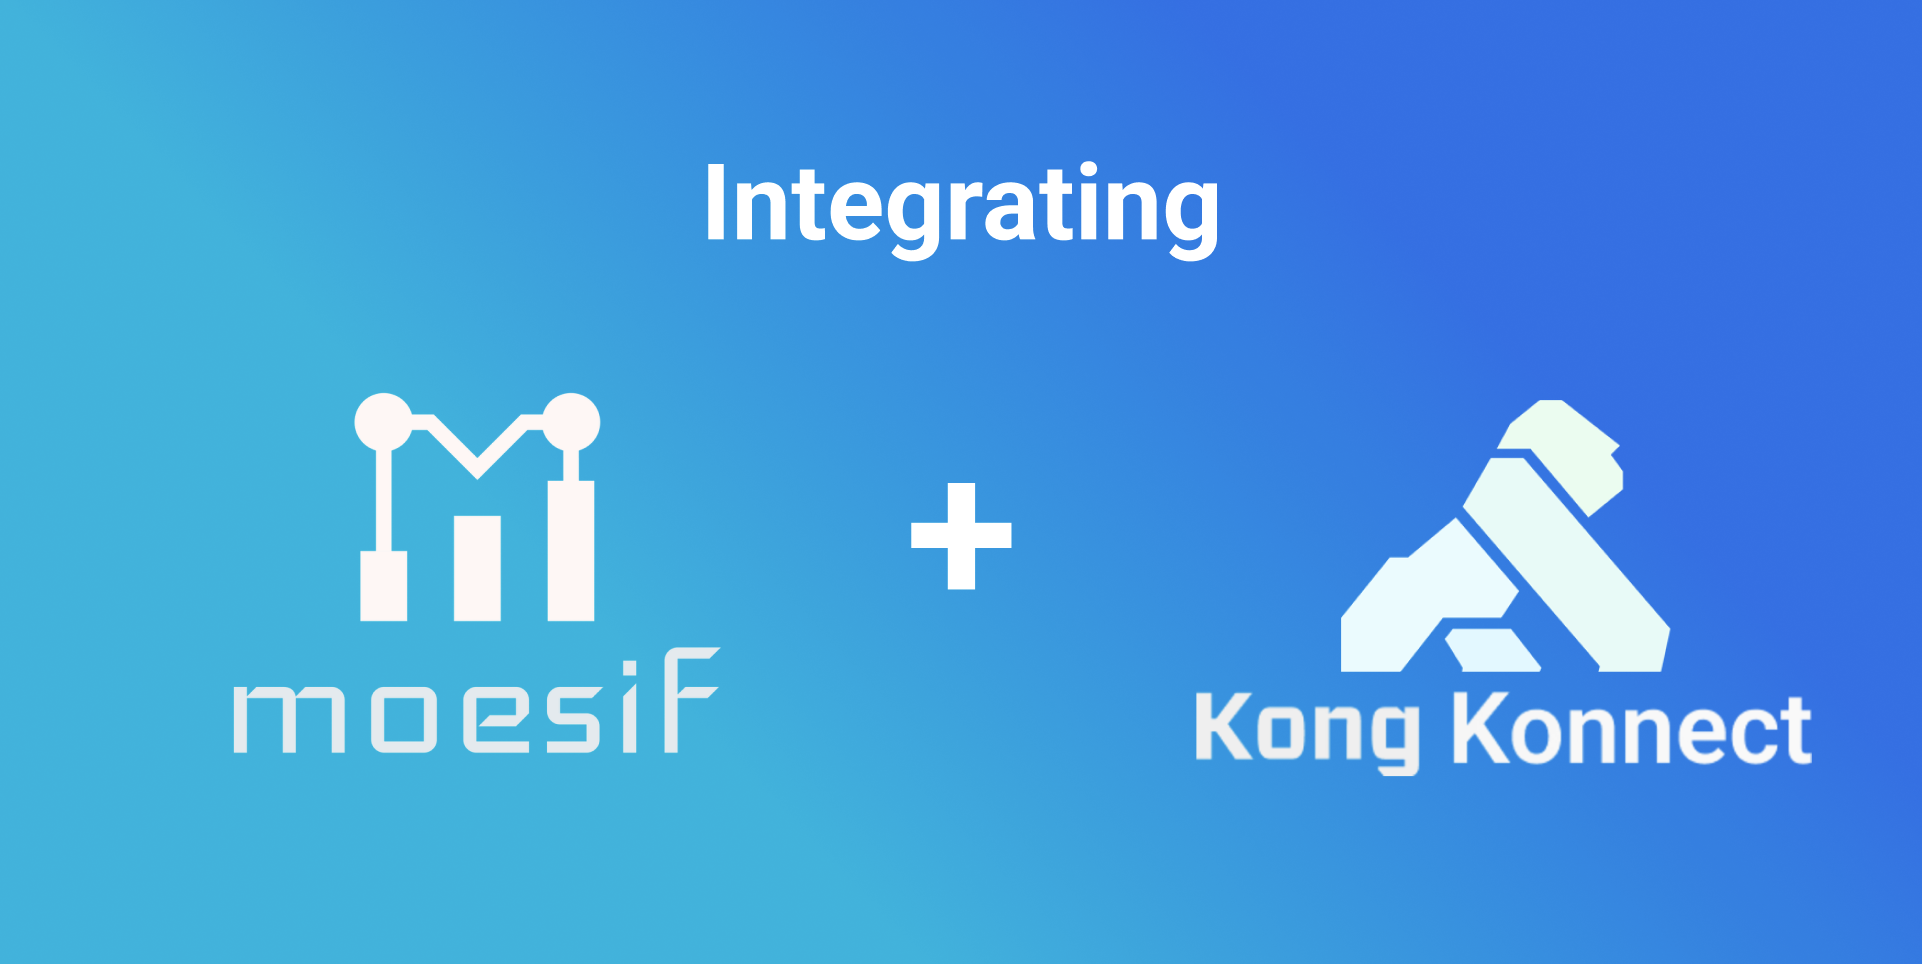 Integrating Moesif and Kong Konnect
